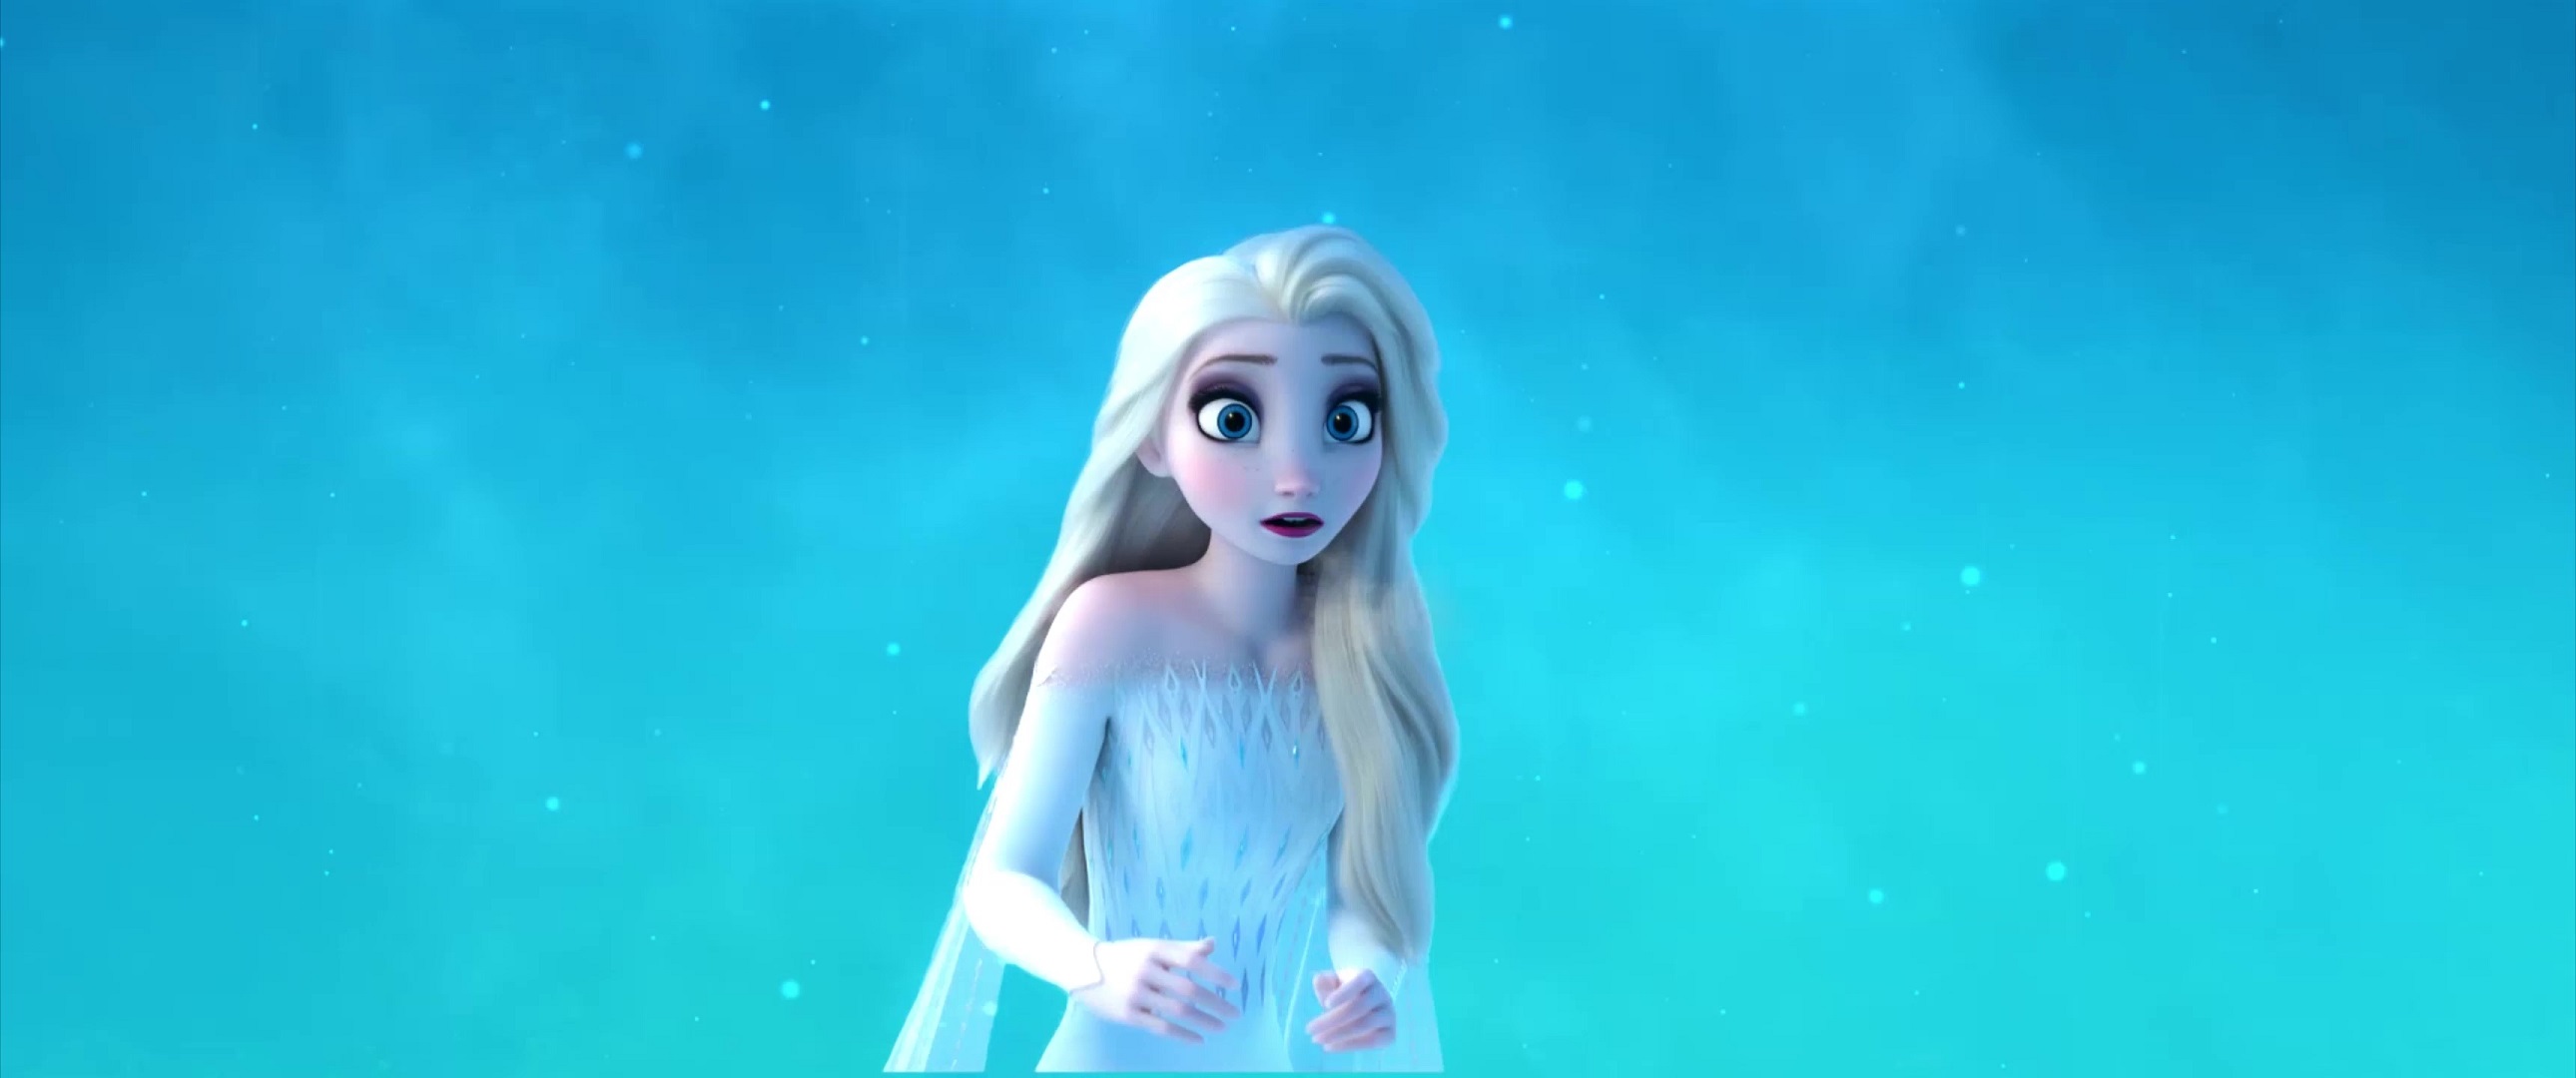 Elsa Frozen 2 Live Wallpaper - MoeWalls